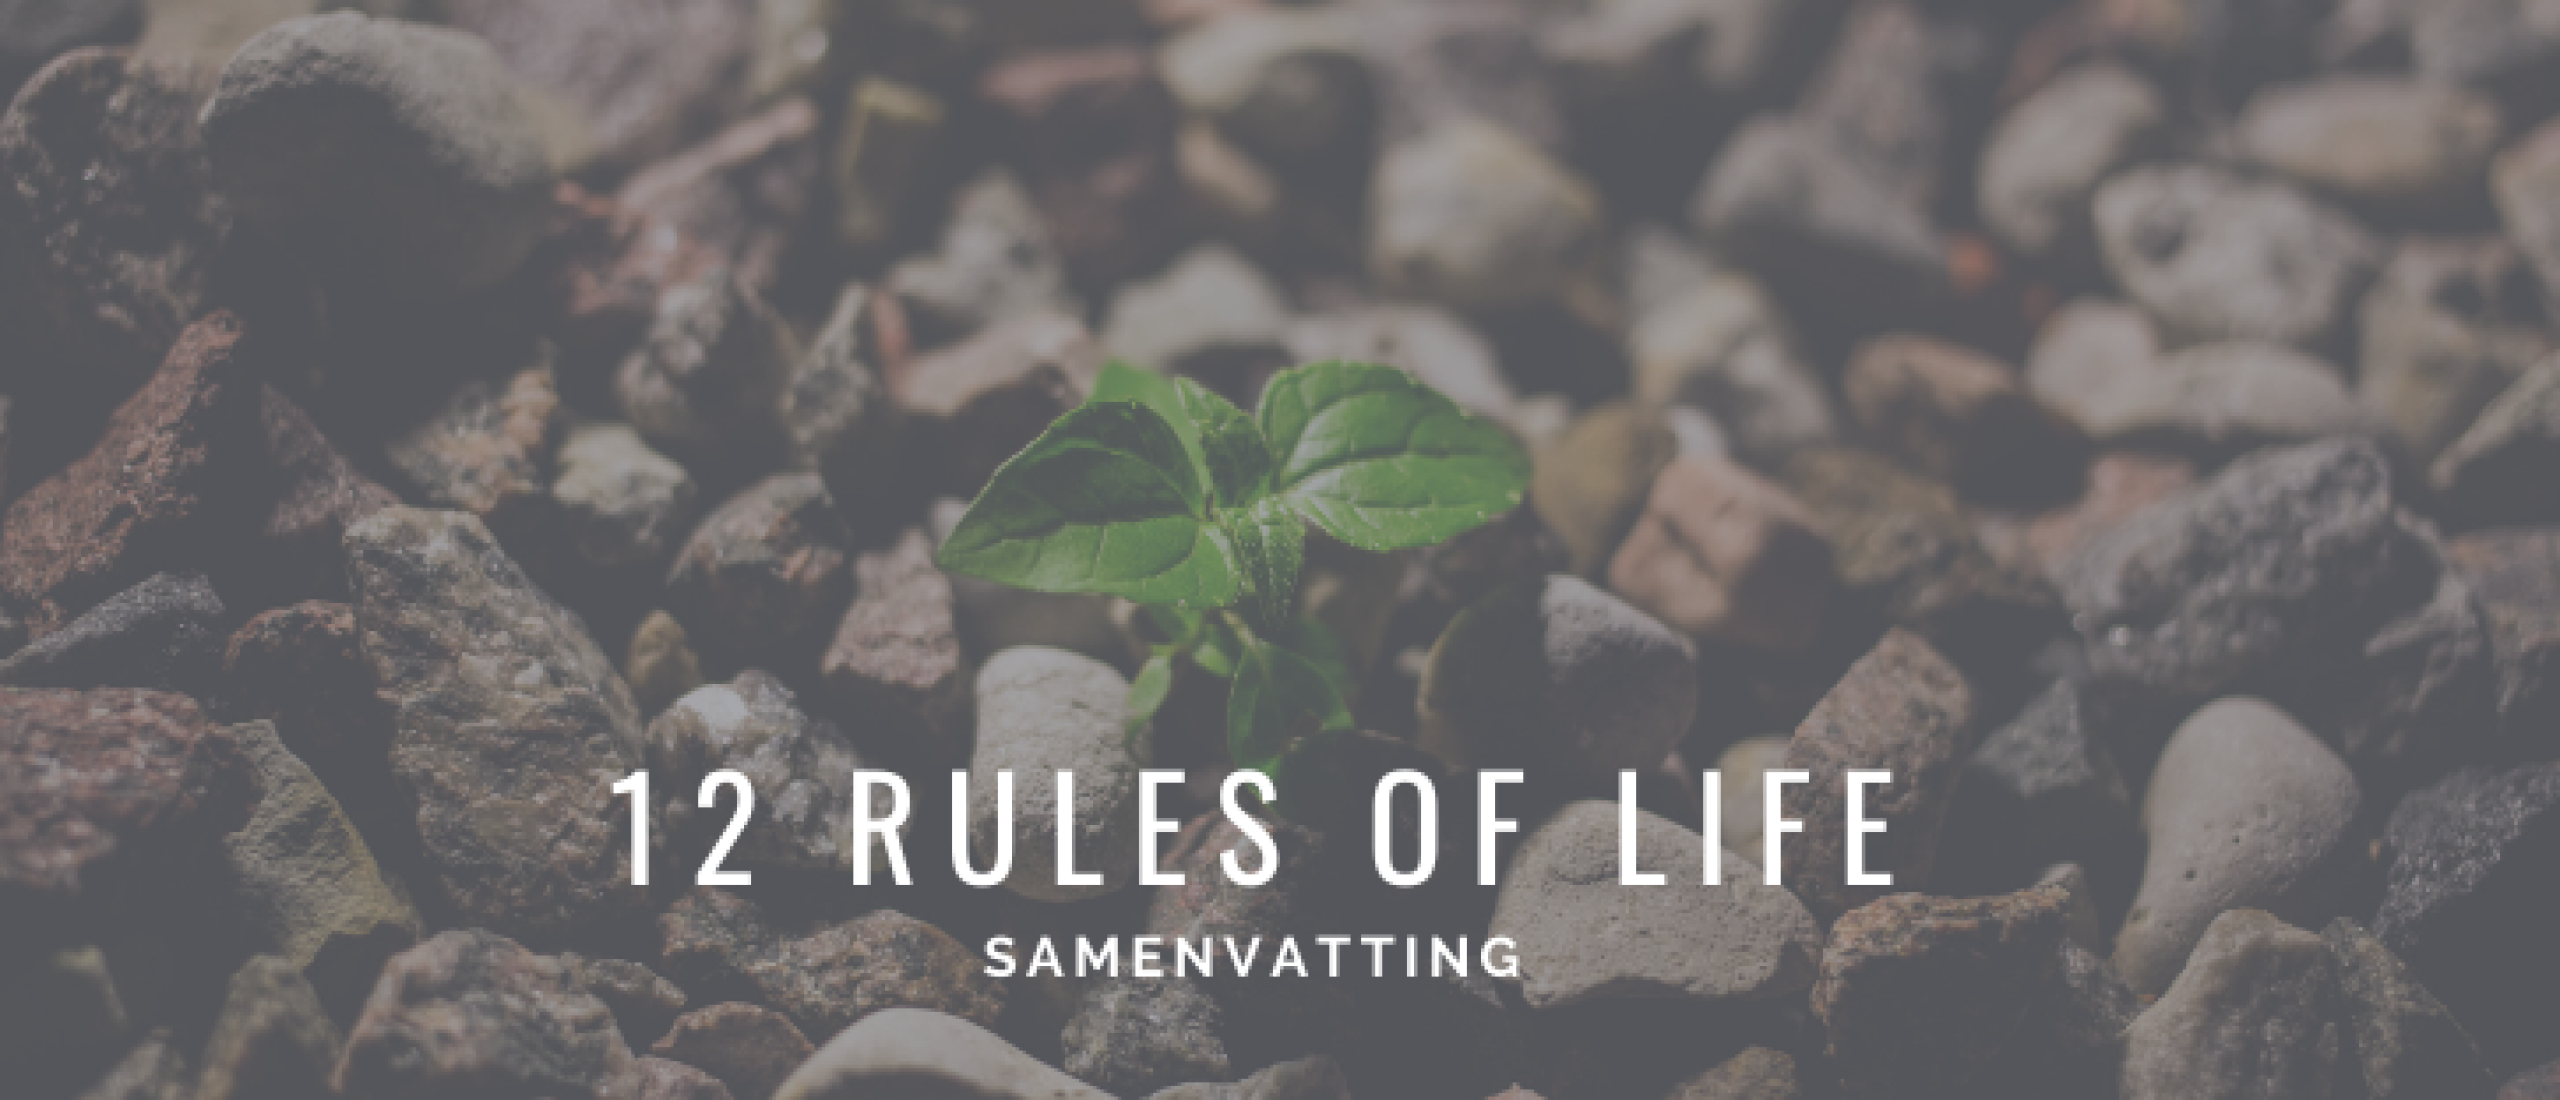 12-rules-of-life-samenvatting